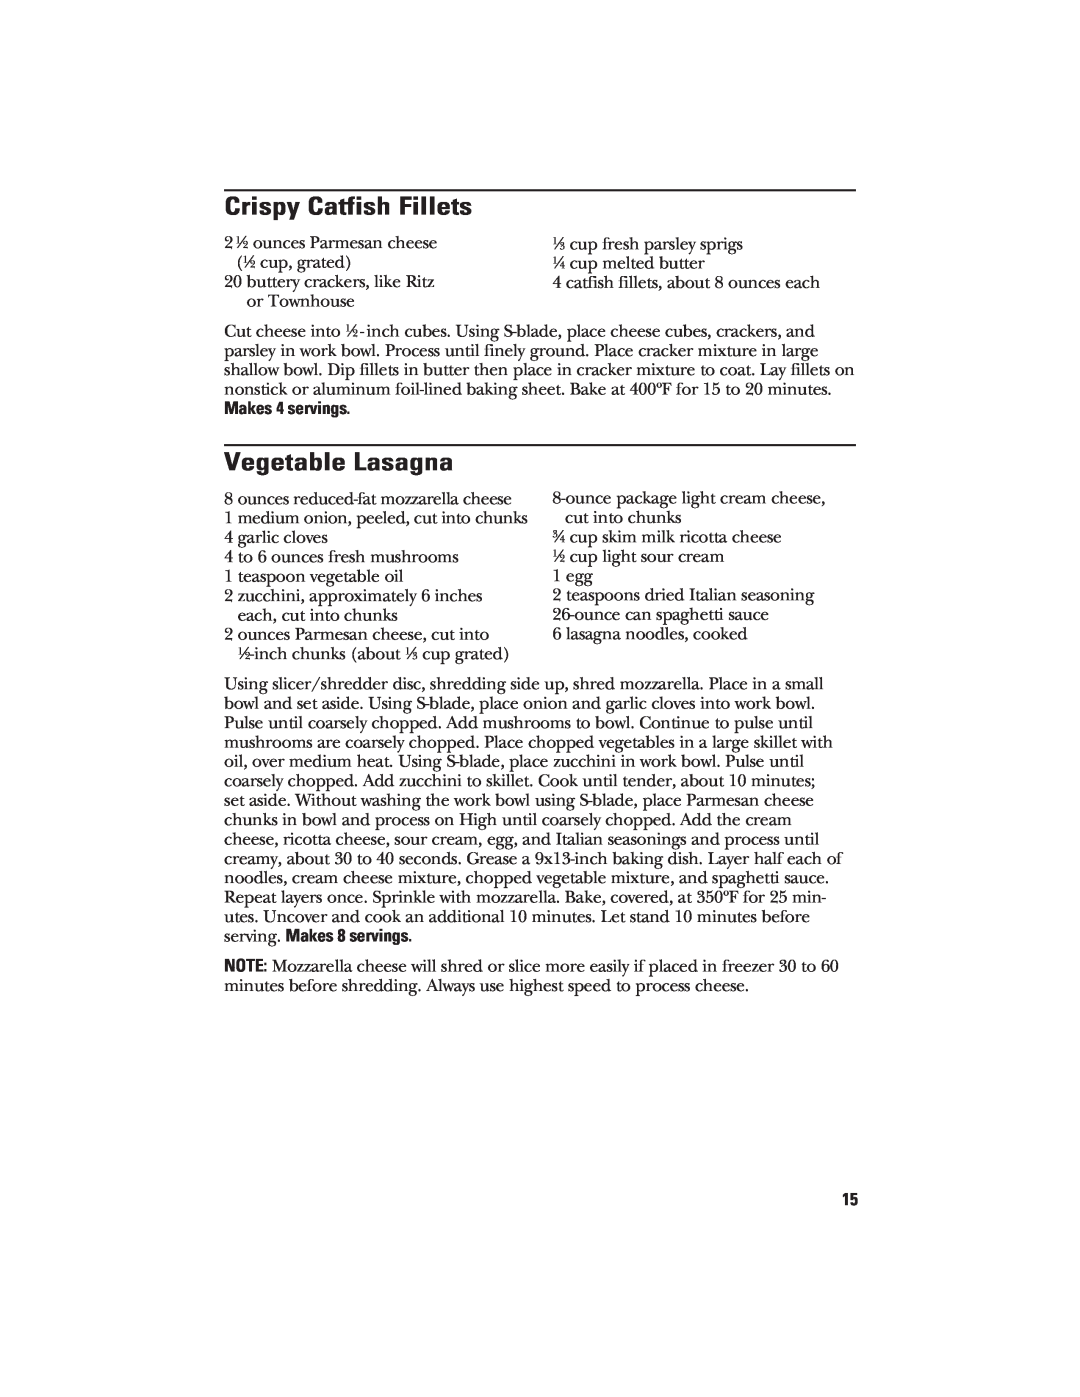 GE 840074400 manual Crispy Catfish Fillets, Vegetable Lasagna, Makes 4 servings 